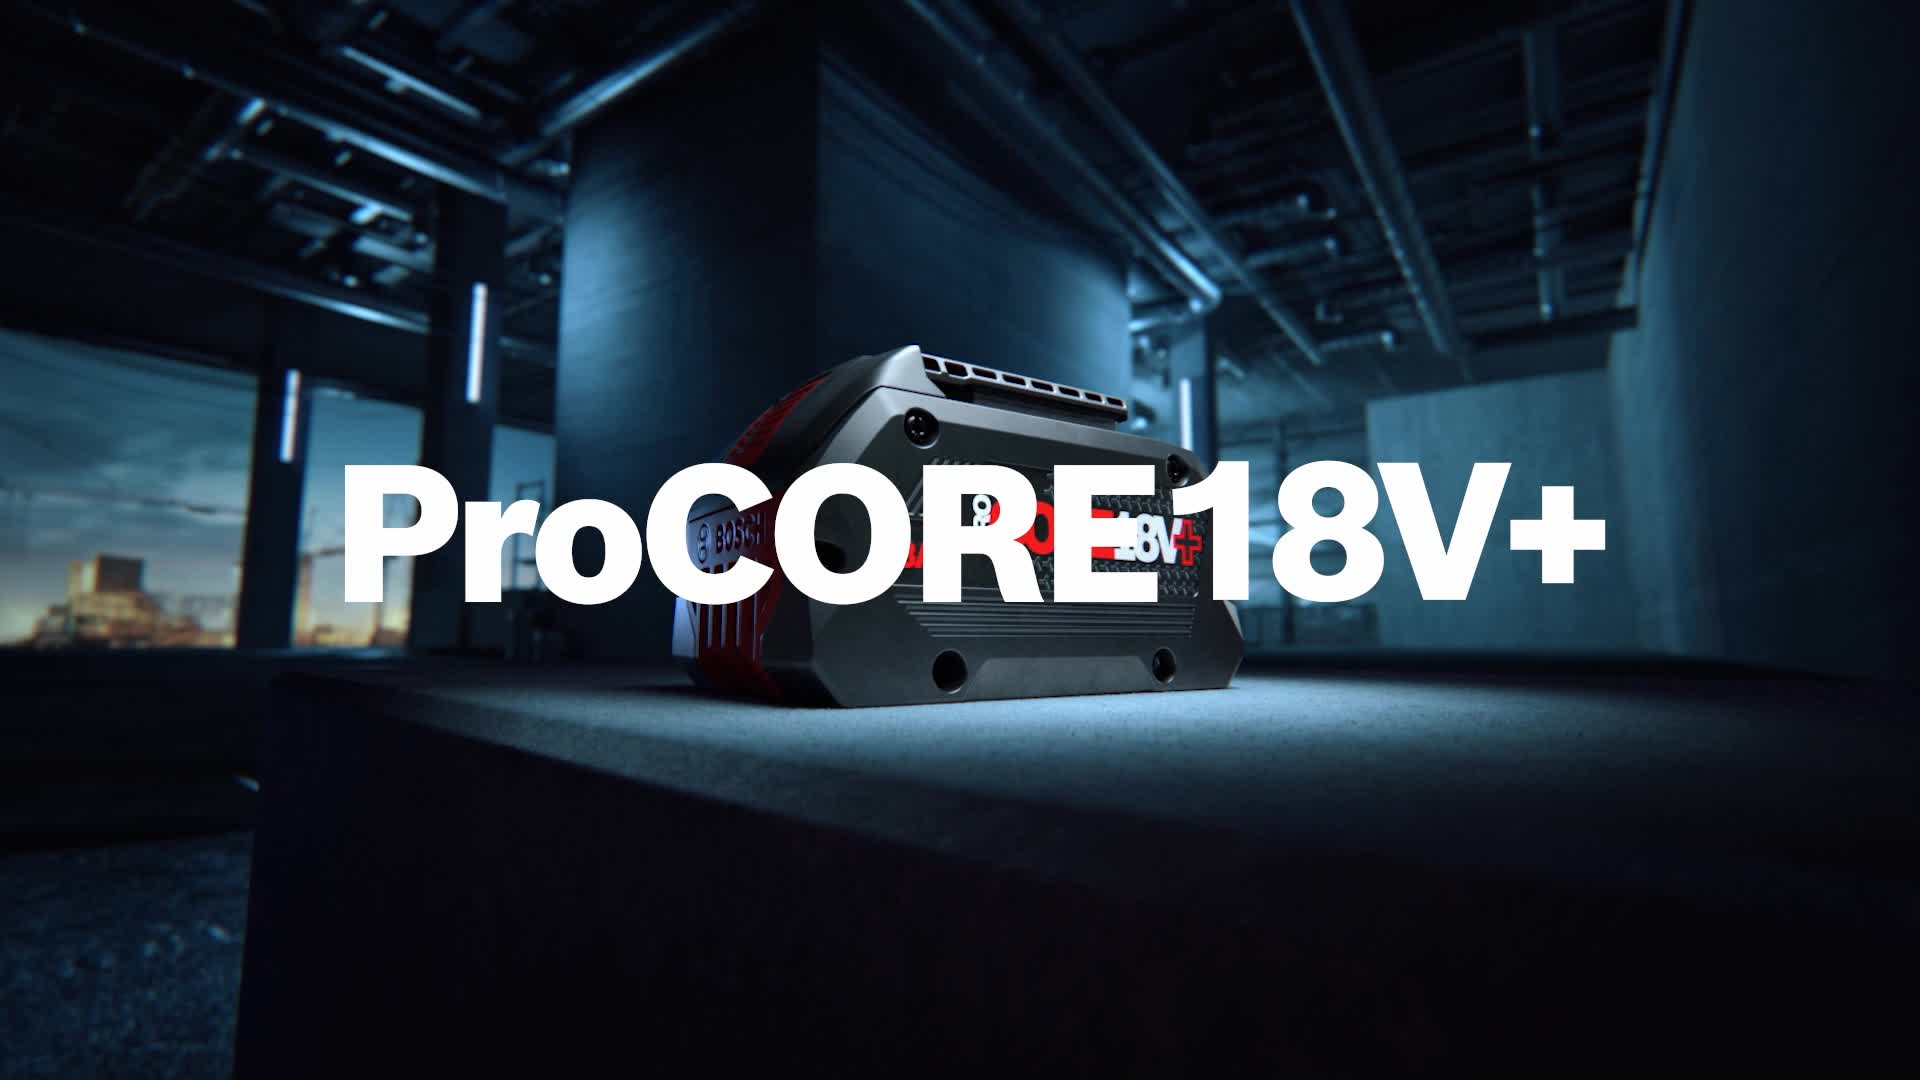 ProCORE18V+ 8.0Ah